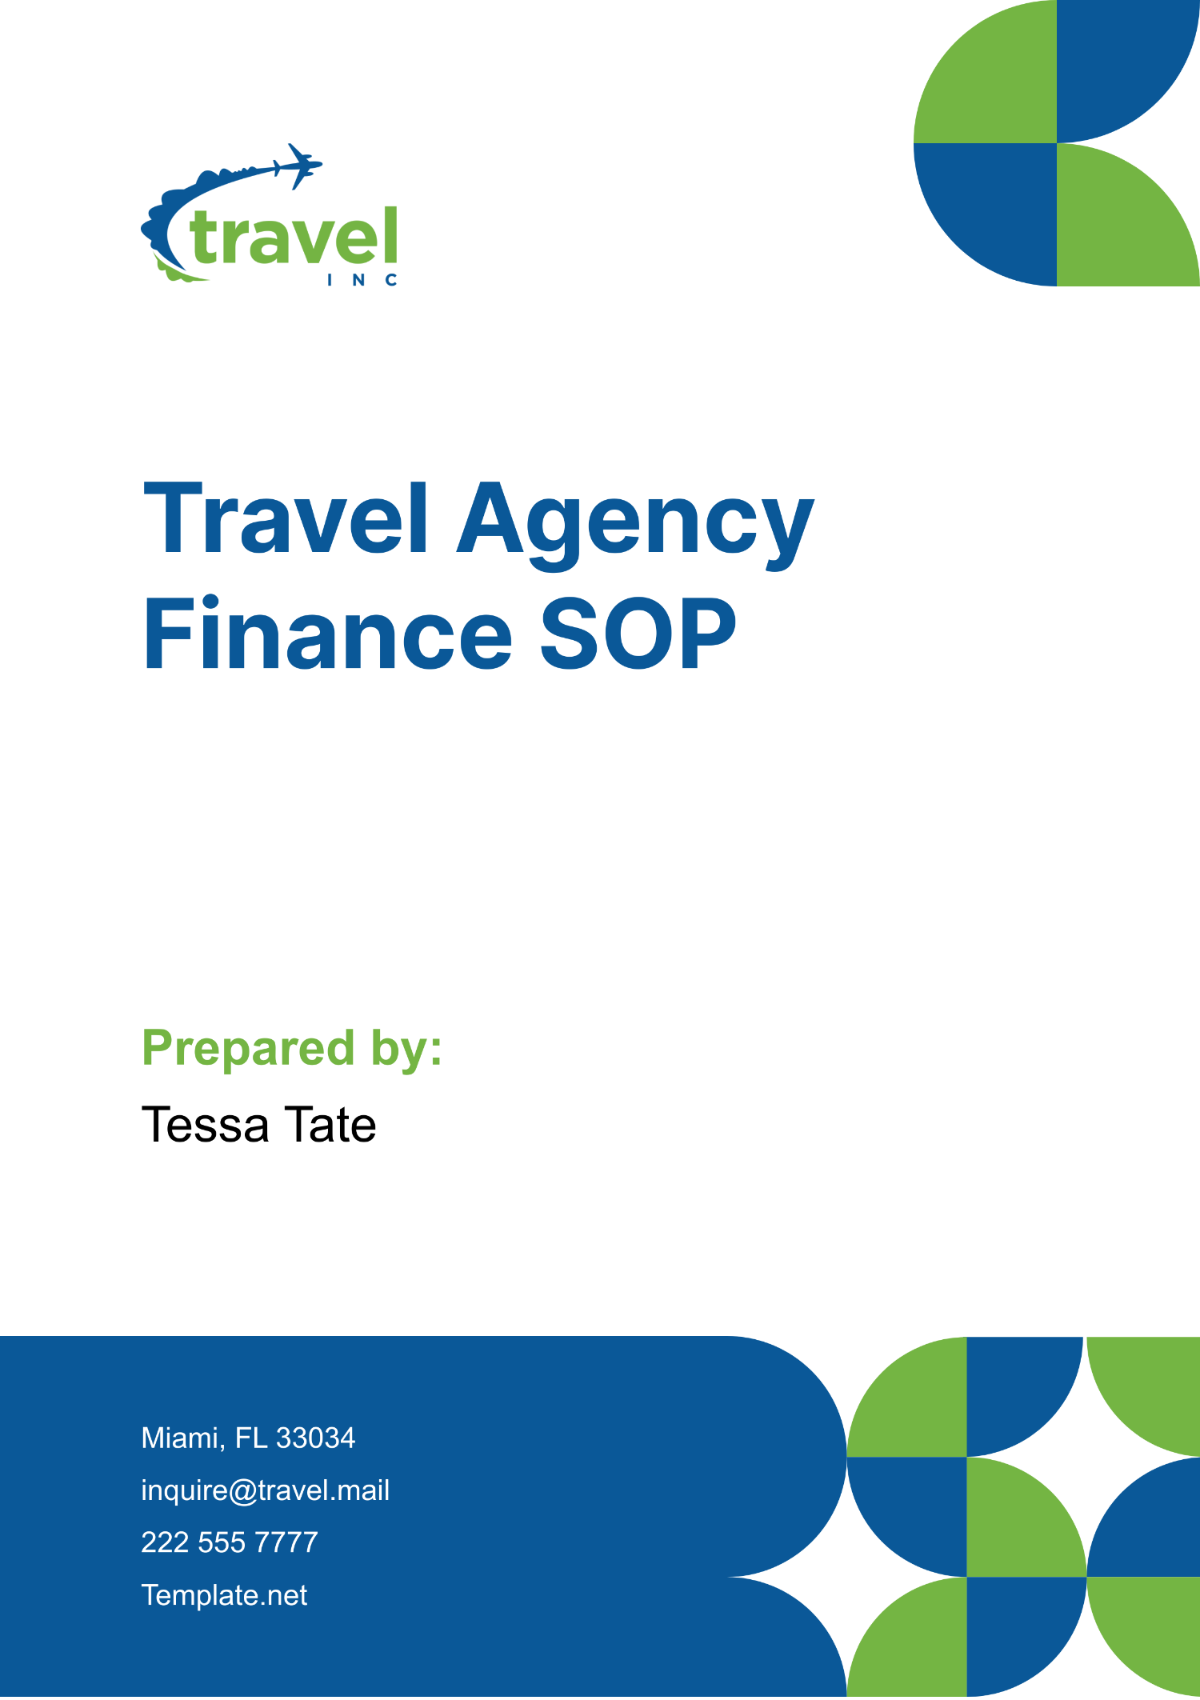 Travel Agency Finance SOP Template